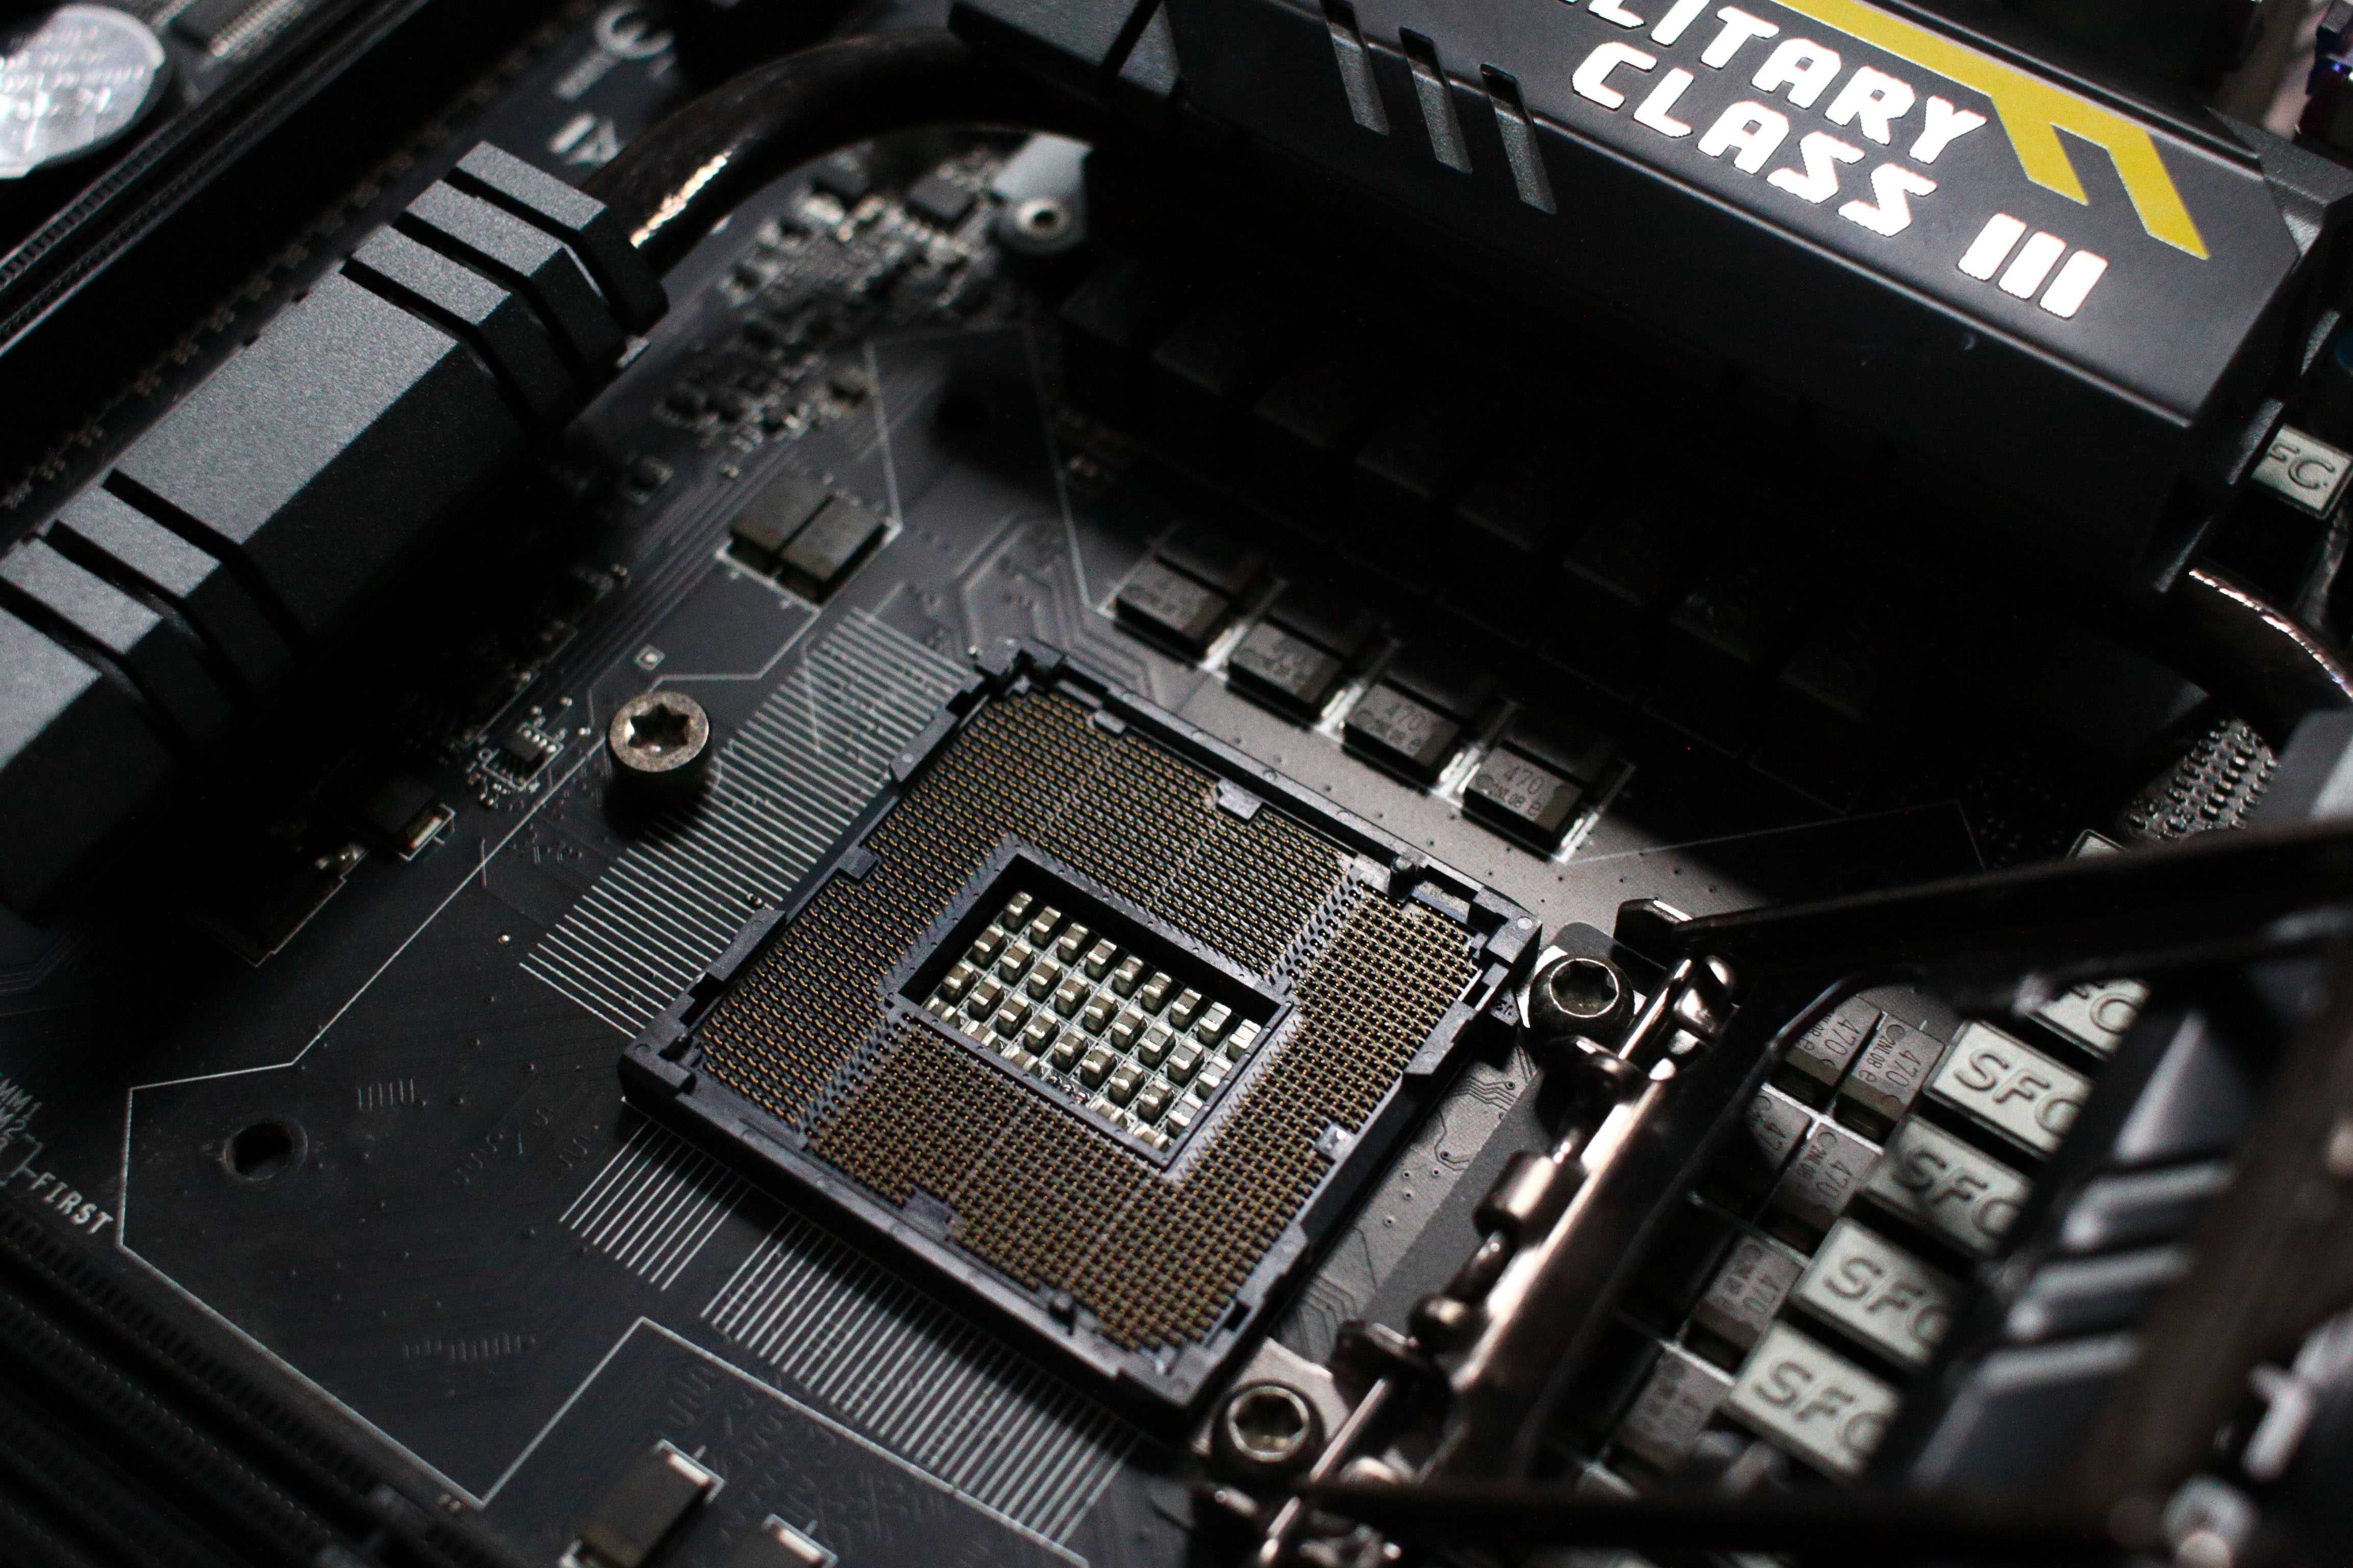 MSI Z77 mPower Intel Core i5-3570K